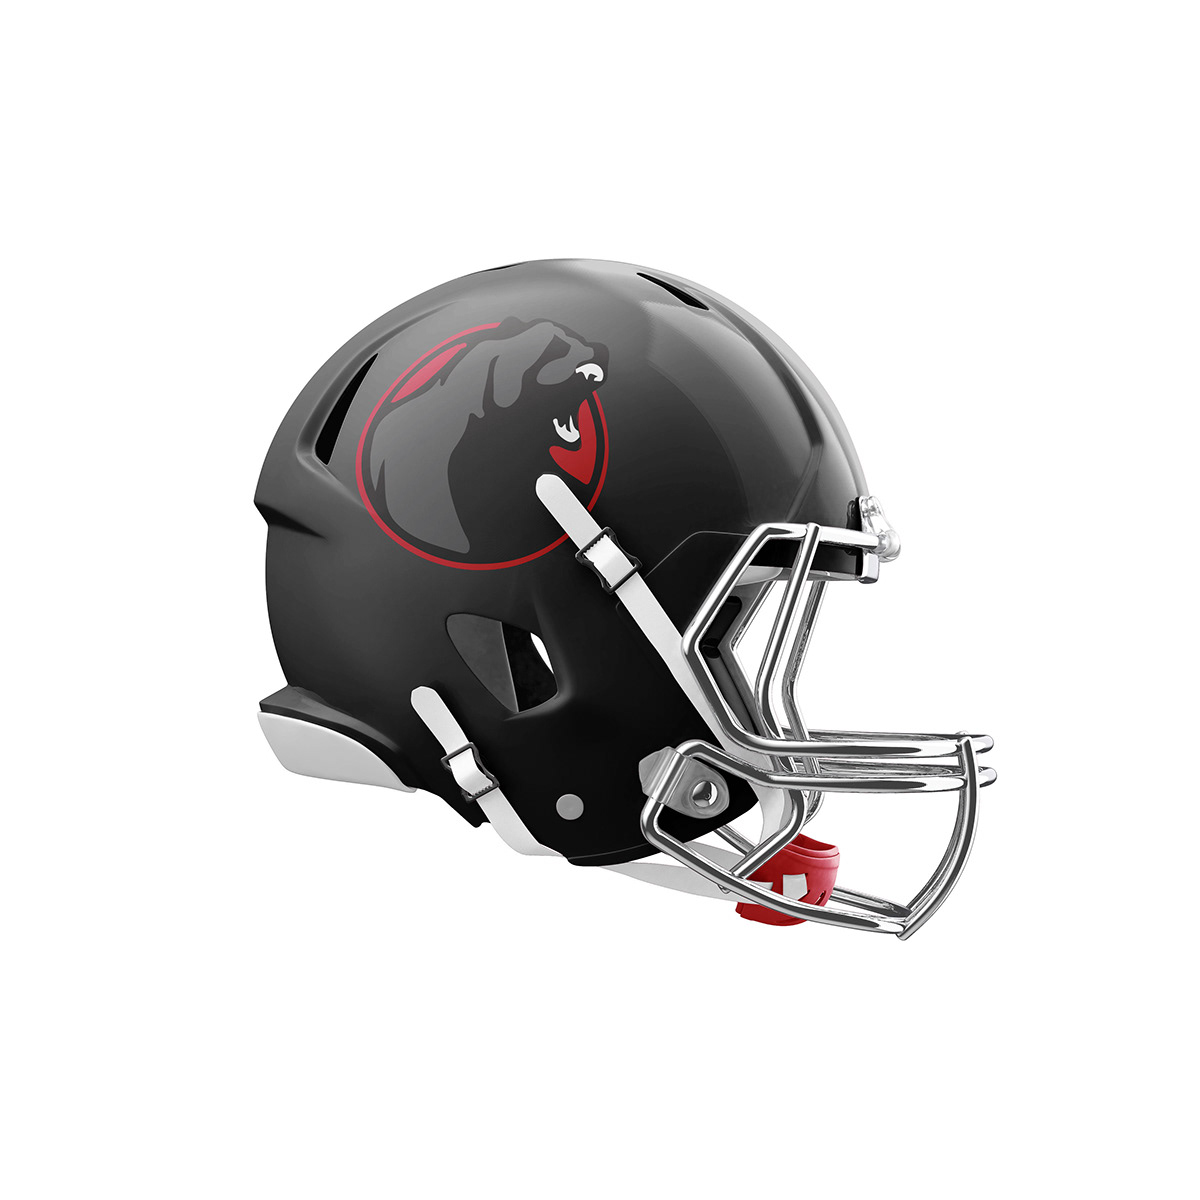 college football Cornell football Cornell University sportswear design uniform design Adobe Portfolio